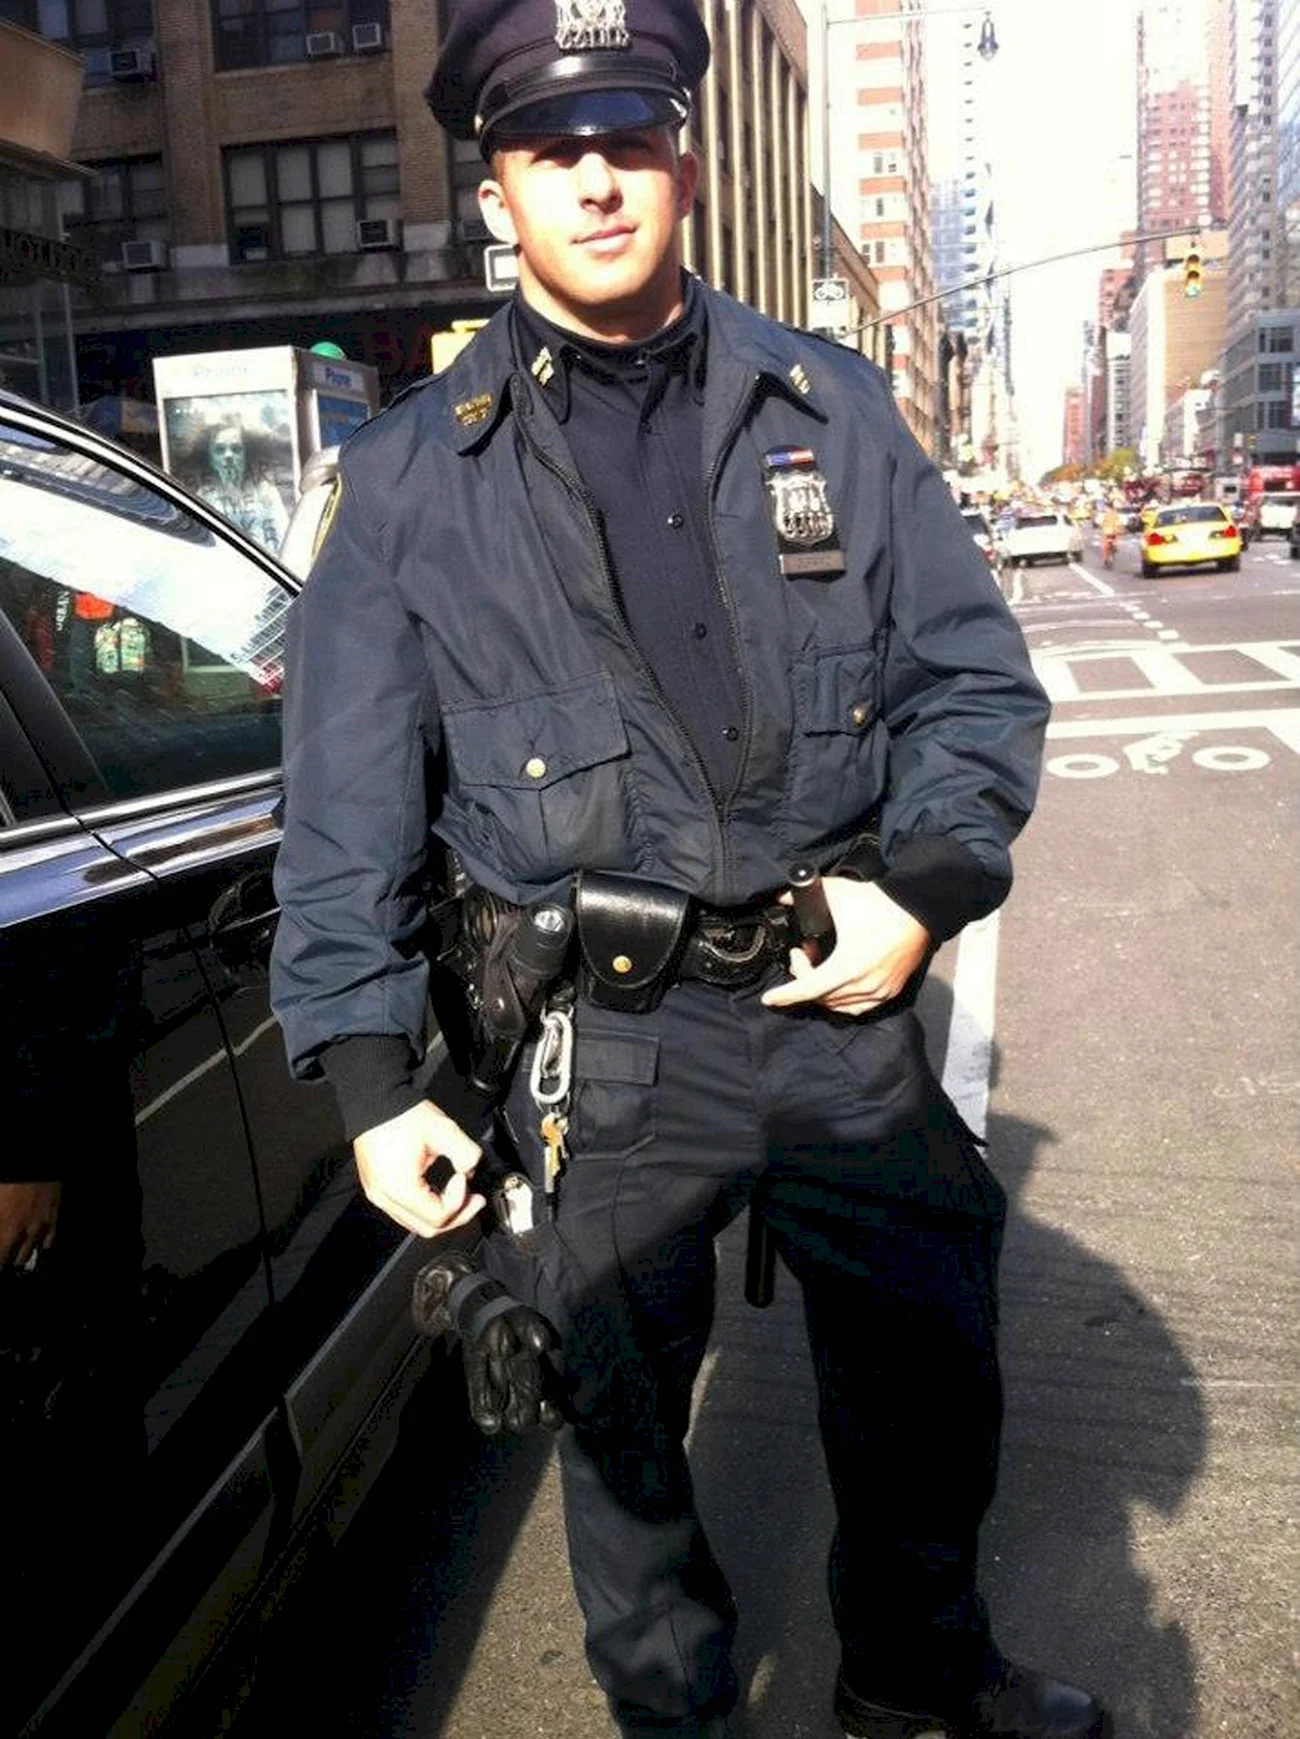 NYPD Police униформа. Красивая картинка